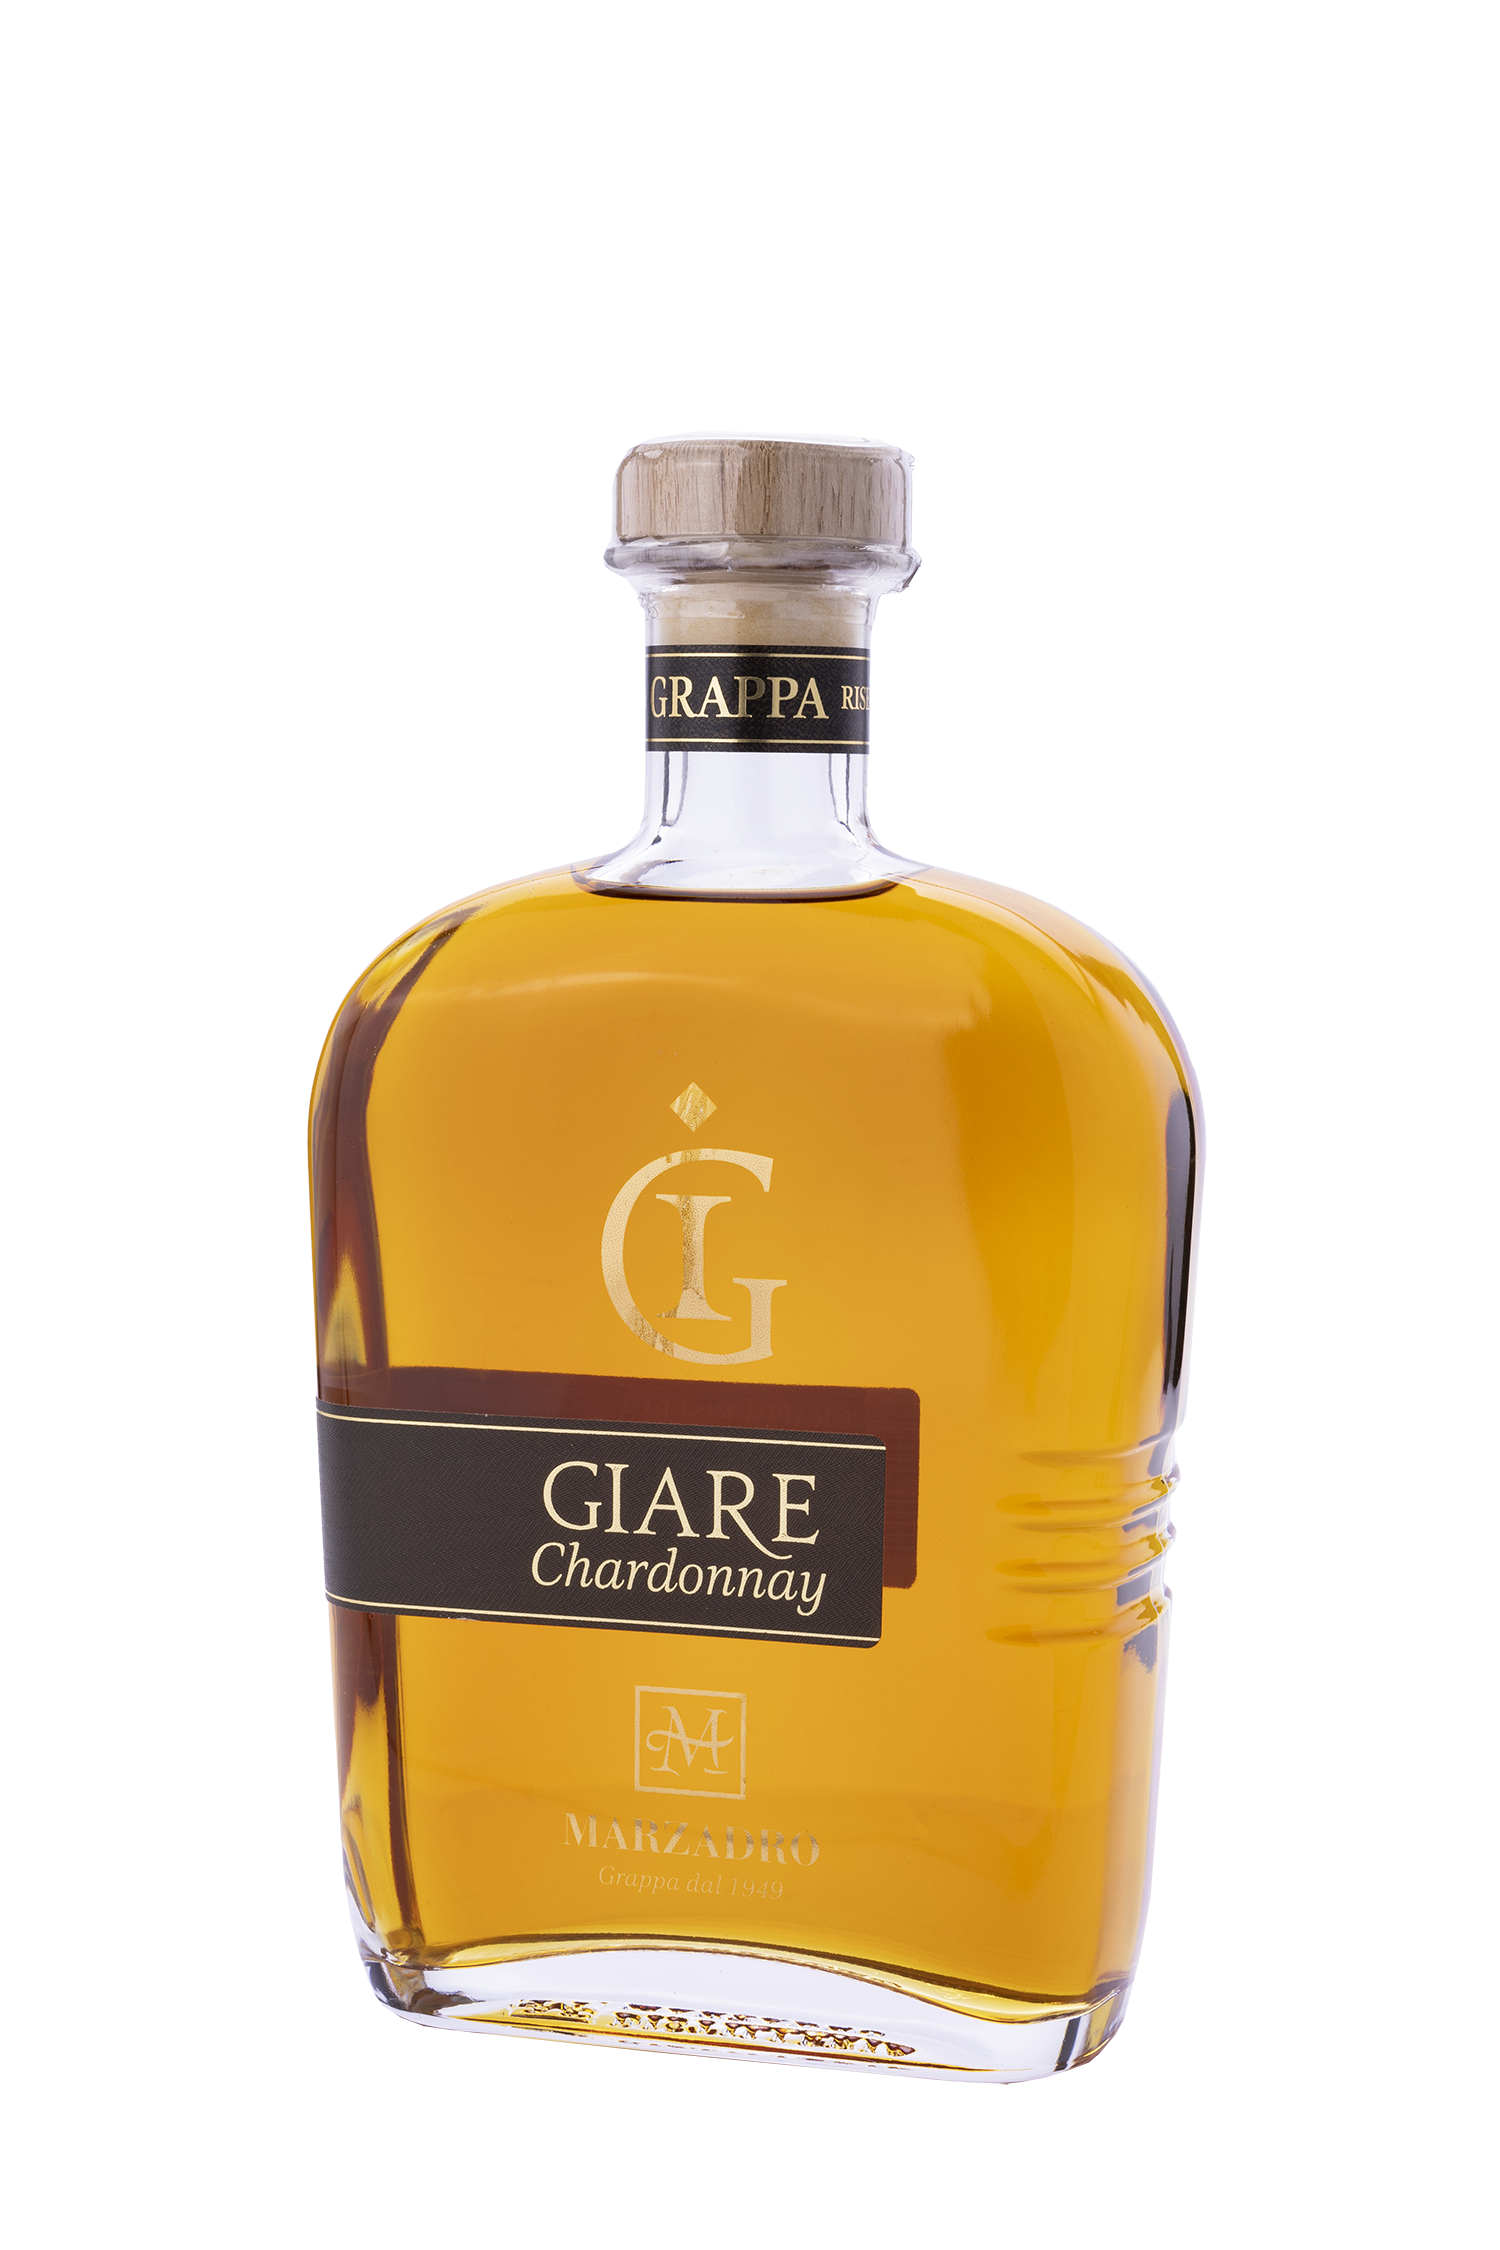 Grappa Giare Chardonnay - Distilleria Marzadro